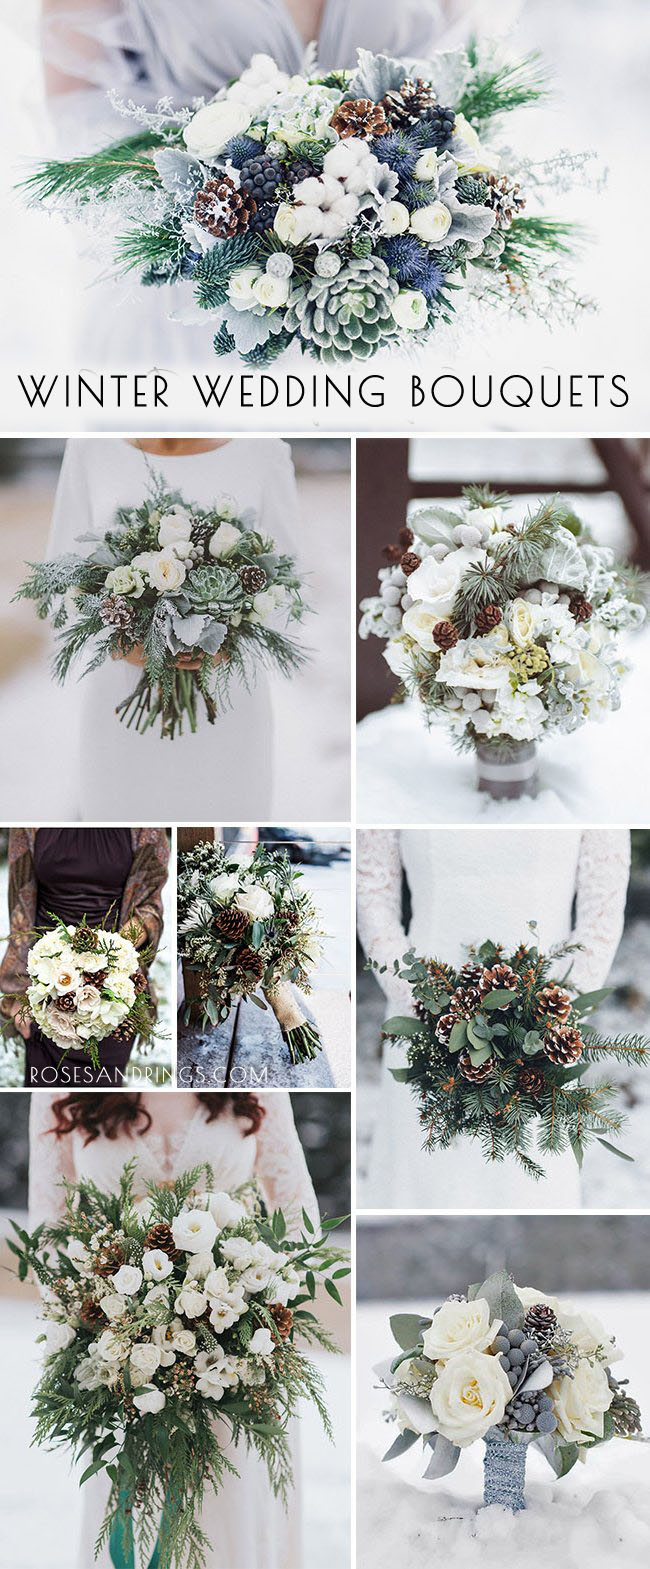 winter wedding bouquets ideas with pine cones